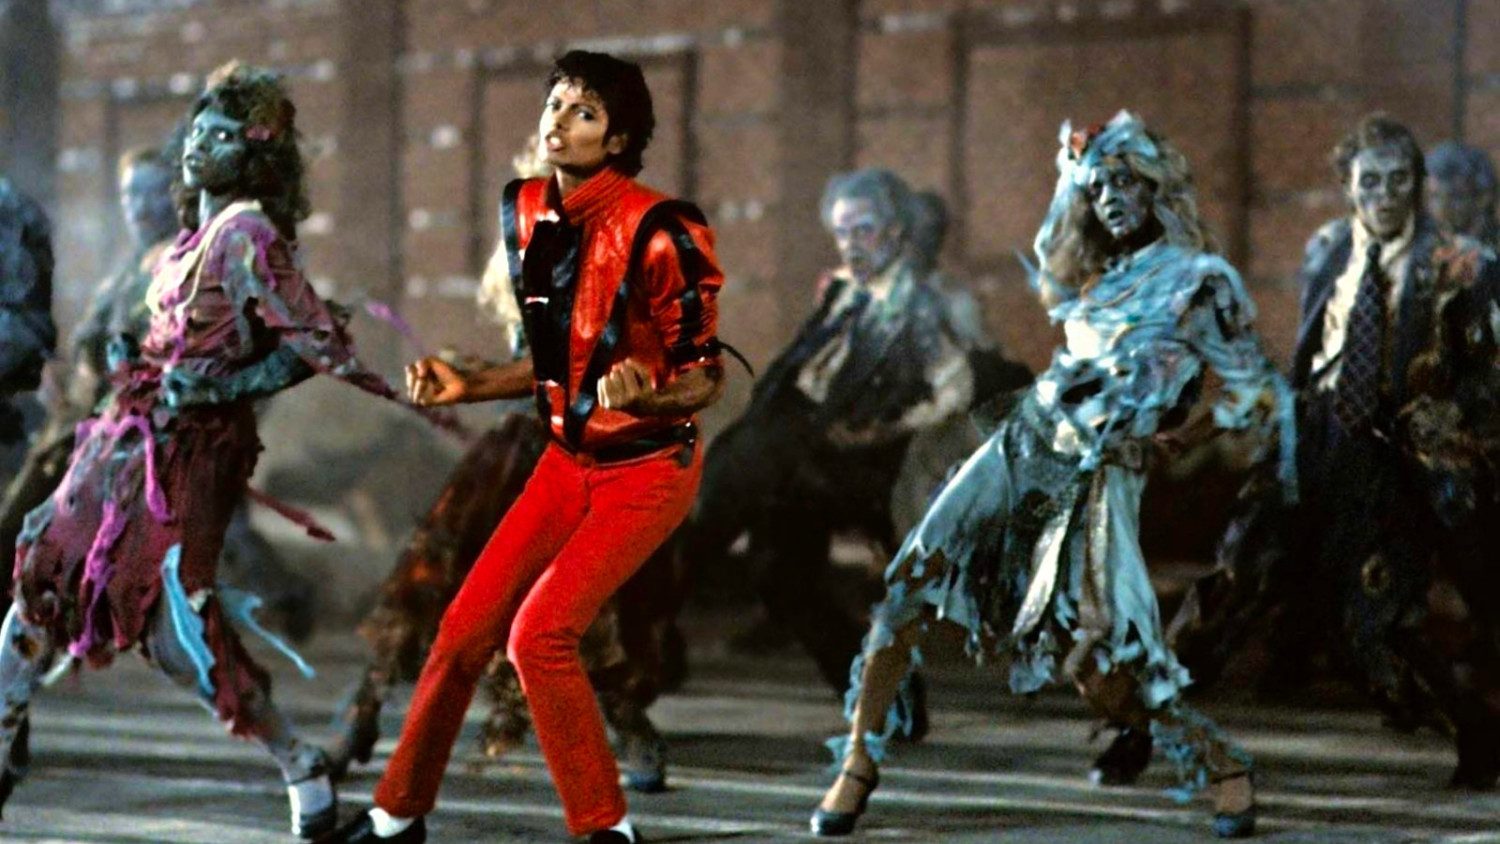 Michael Jackson's Nephew Jaafar Jackson To Play King Of Pop In Biopic